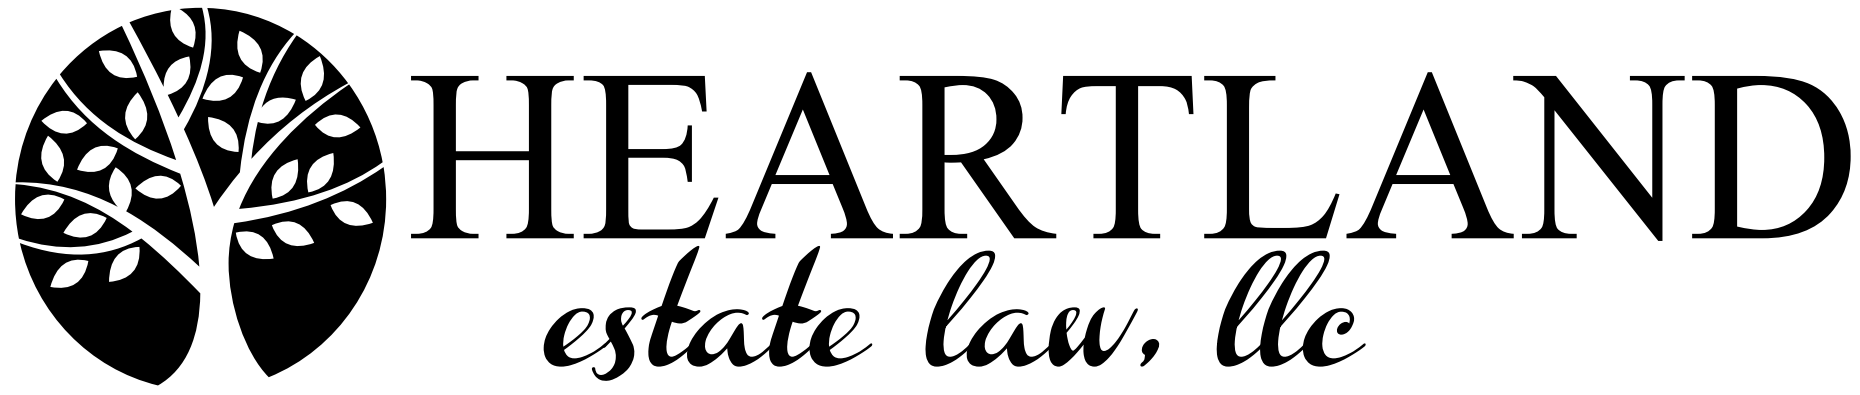 Sullivan Estate Law, LLC